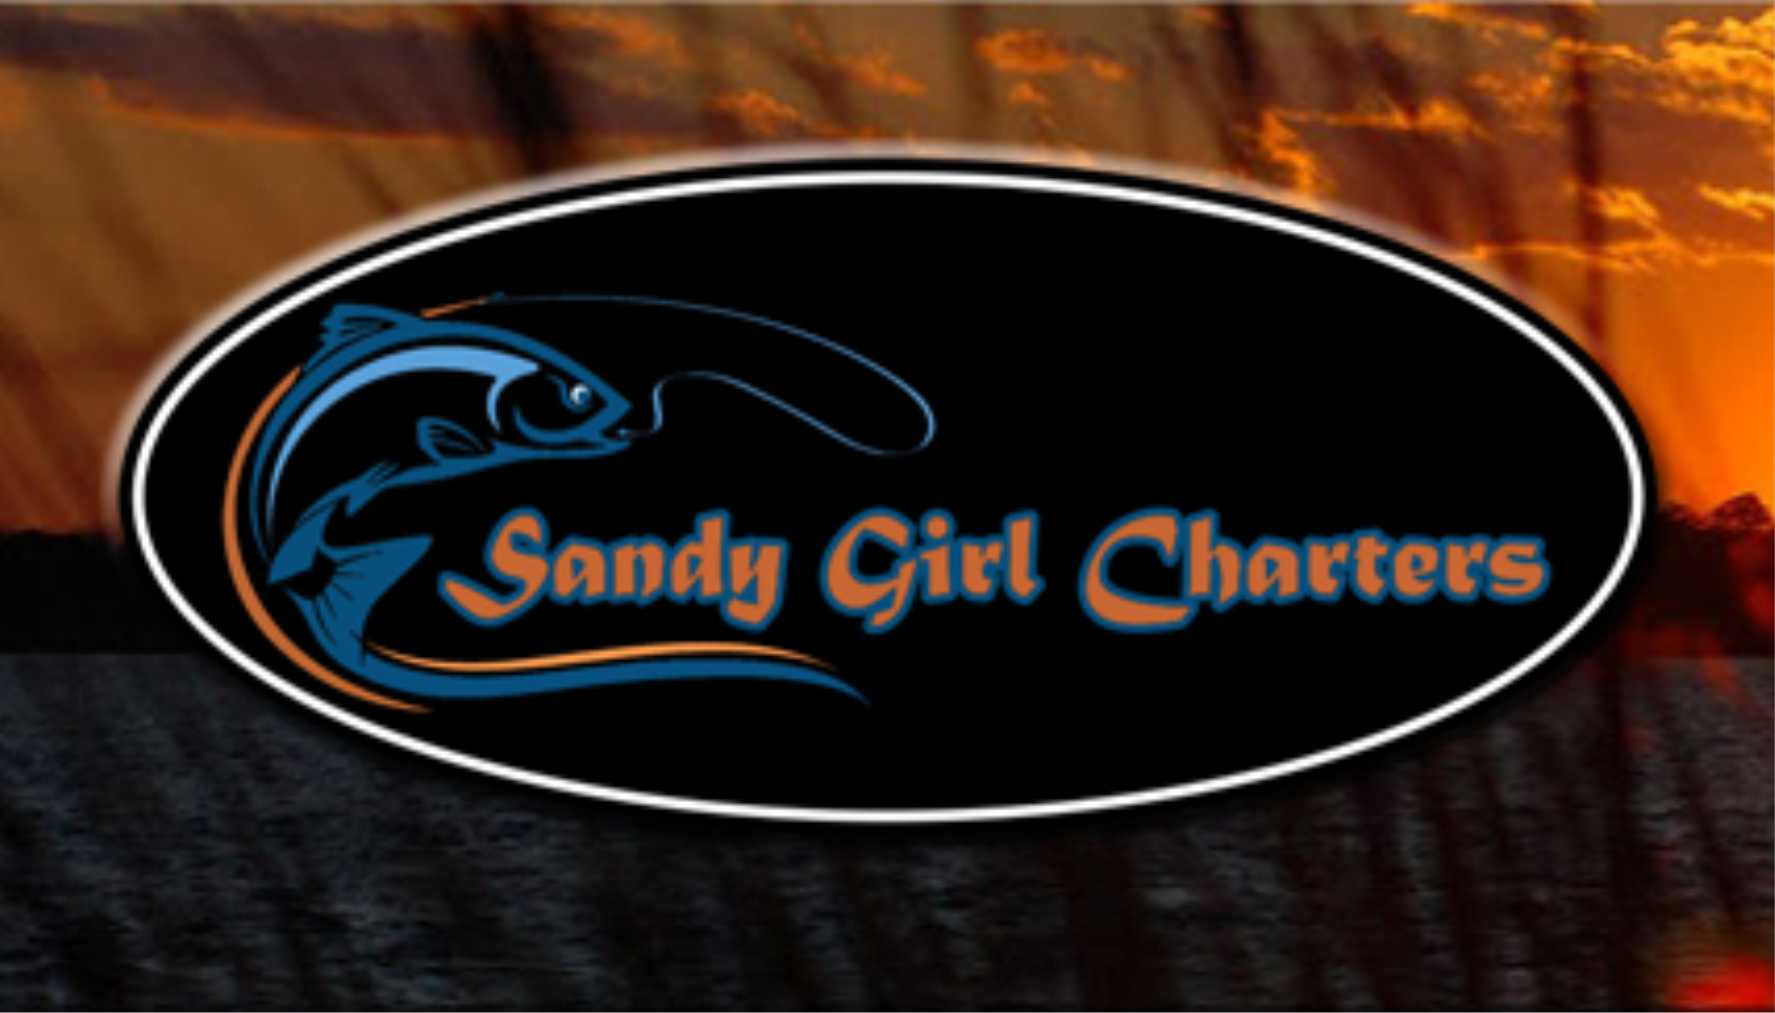 Sandy Girl Charters